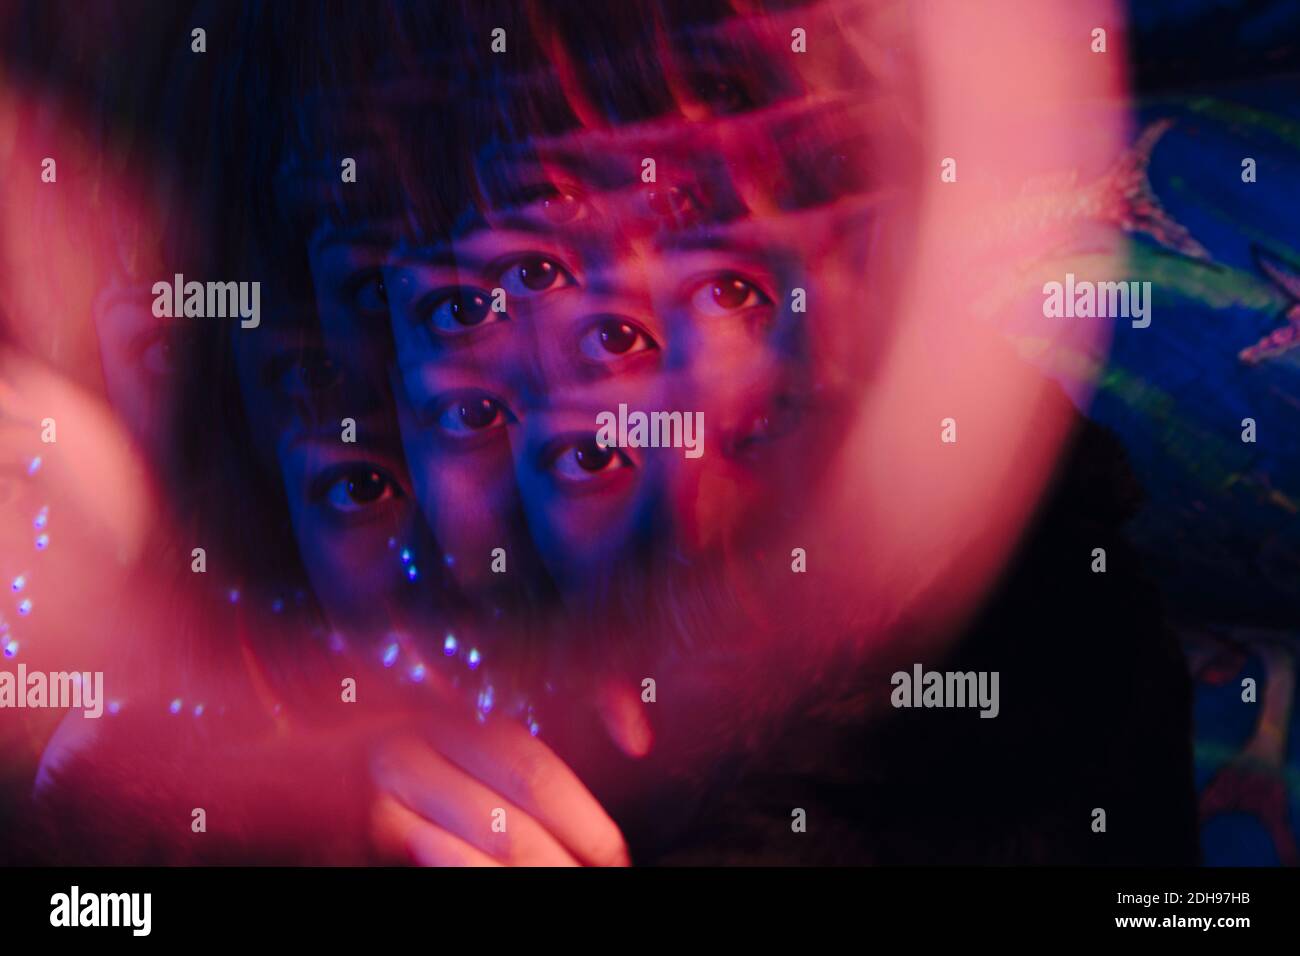 Multiple exposure of woman's eye at illuminated bar Stock Photo